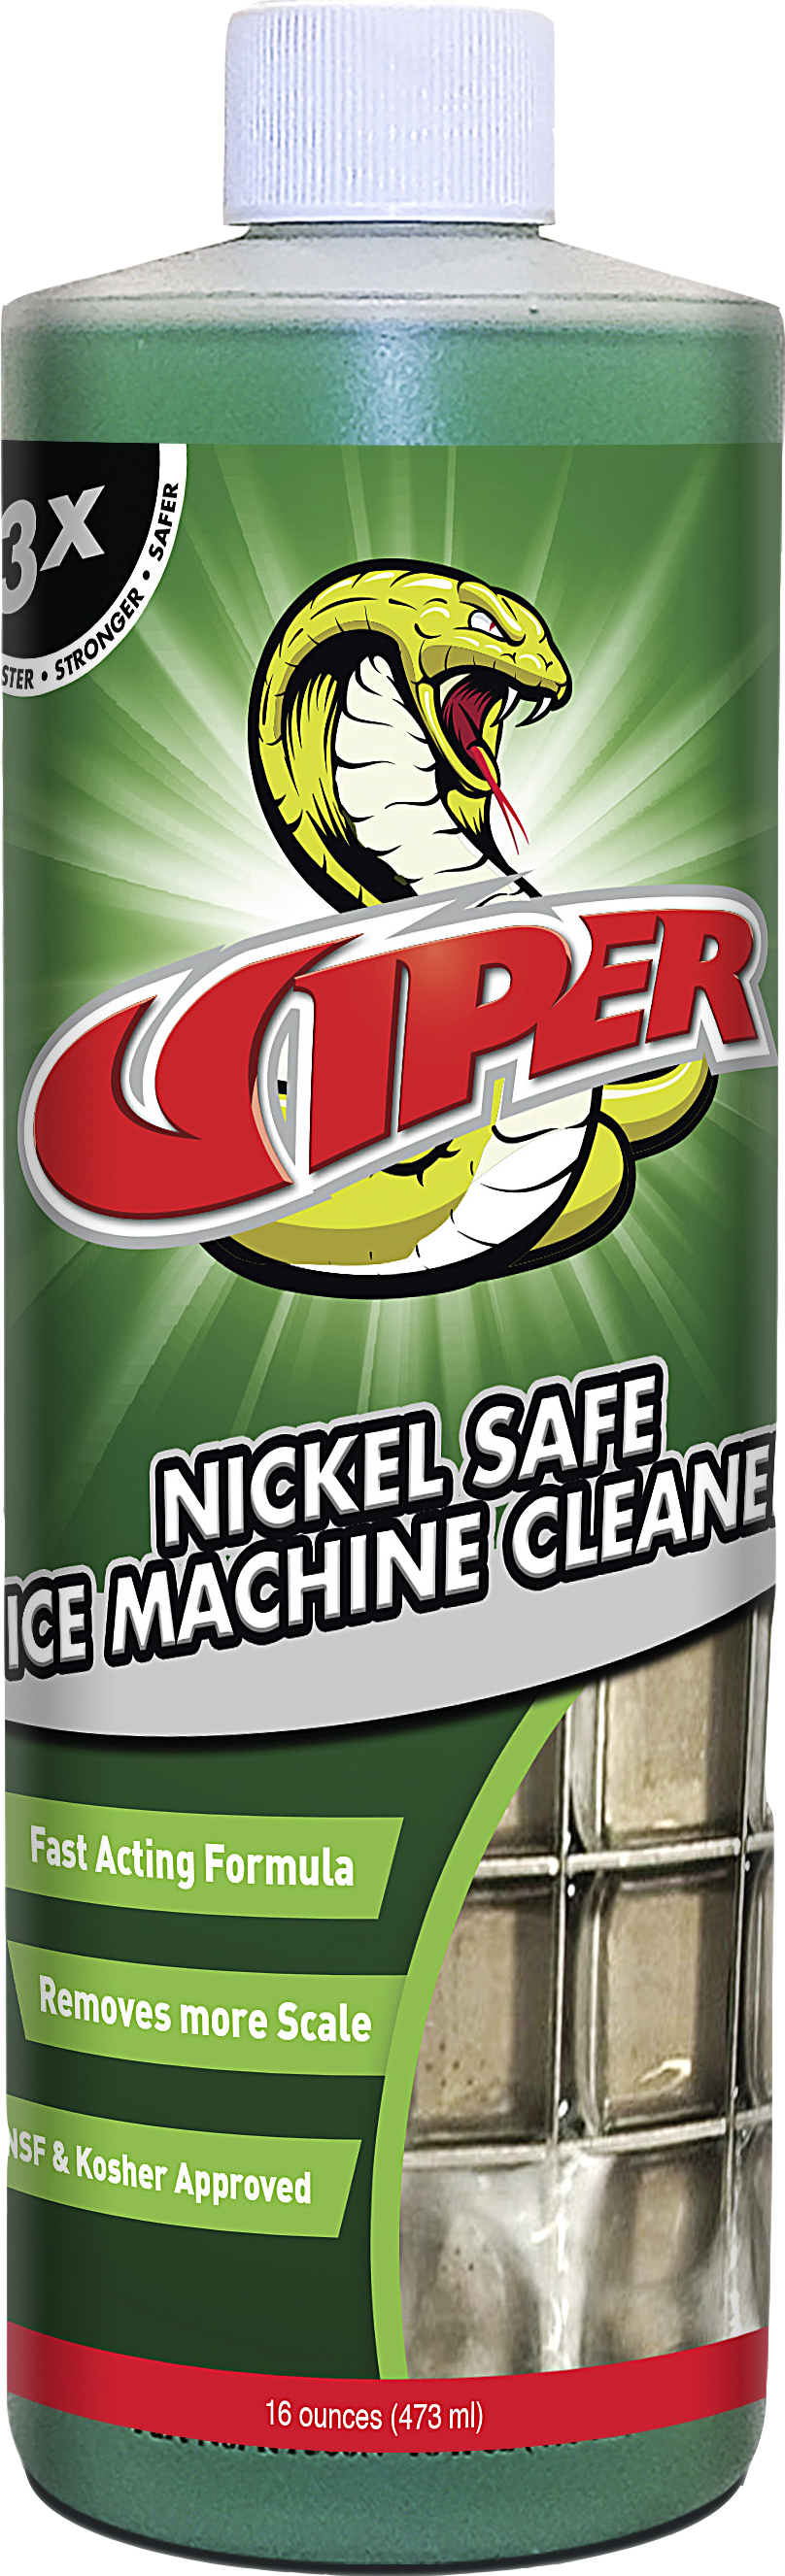 Viper Ice Machine Cleaner 473mL